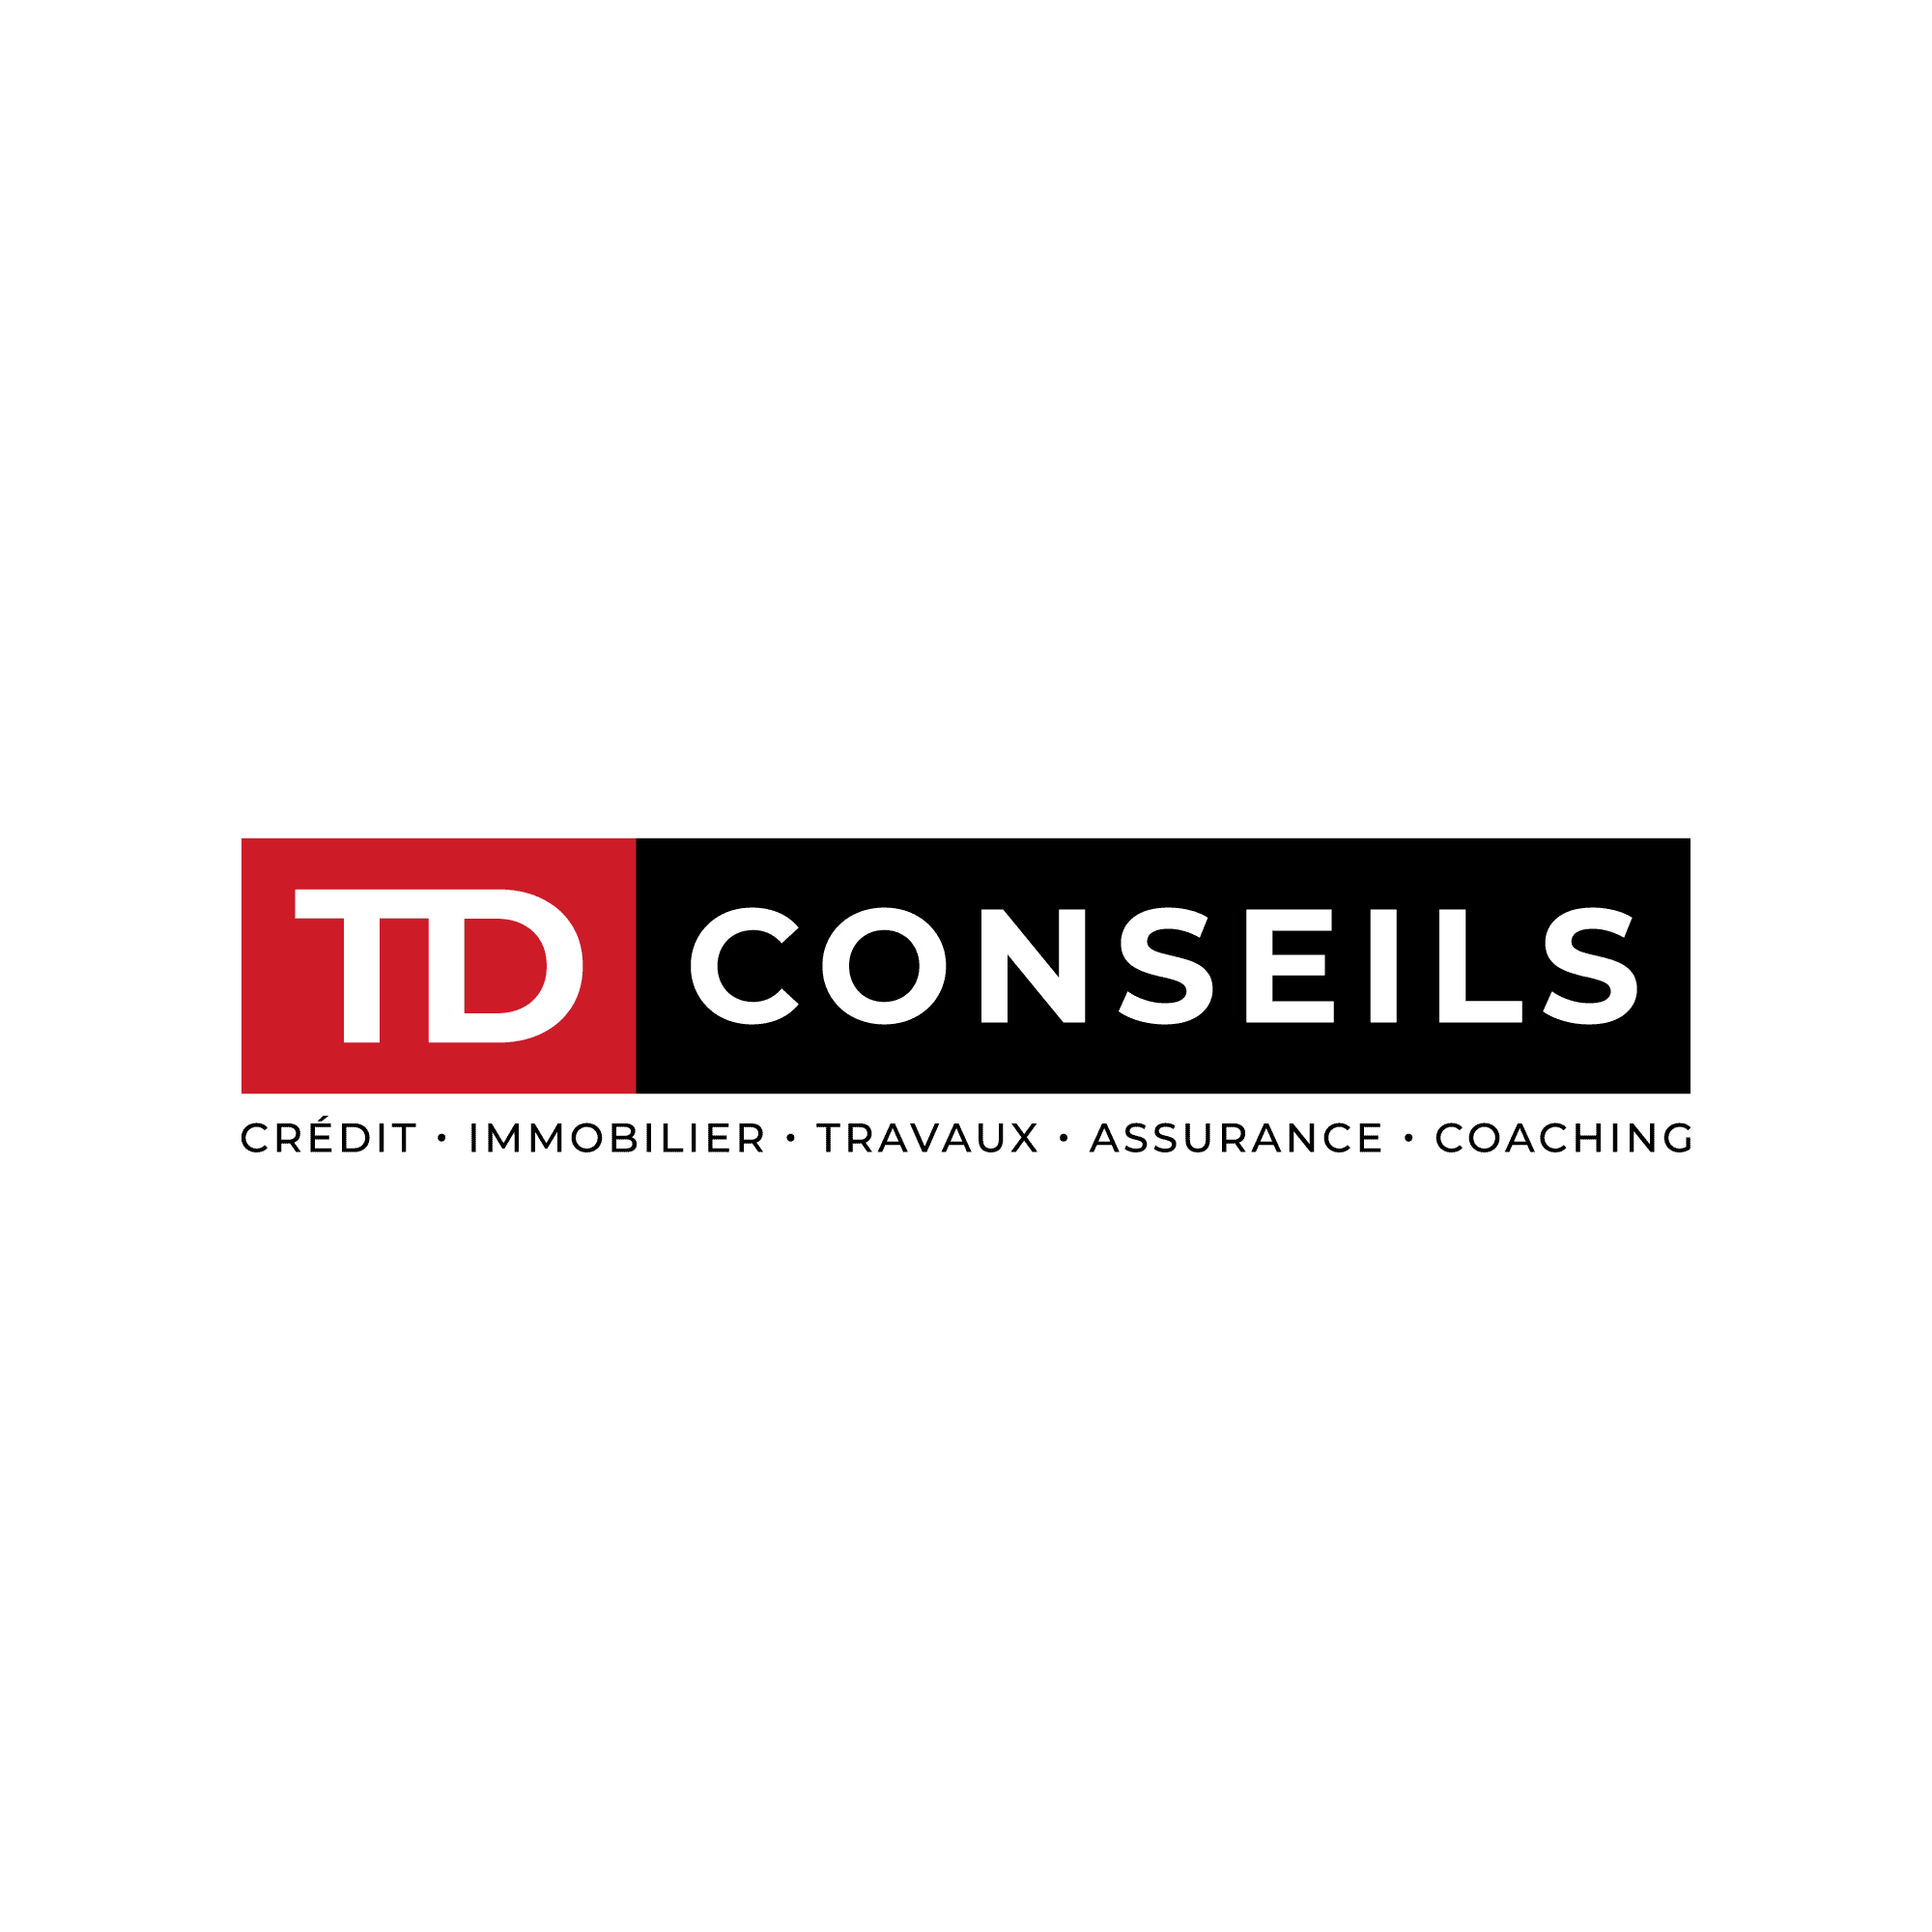 TD CONSEILS